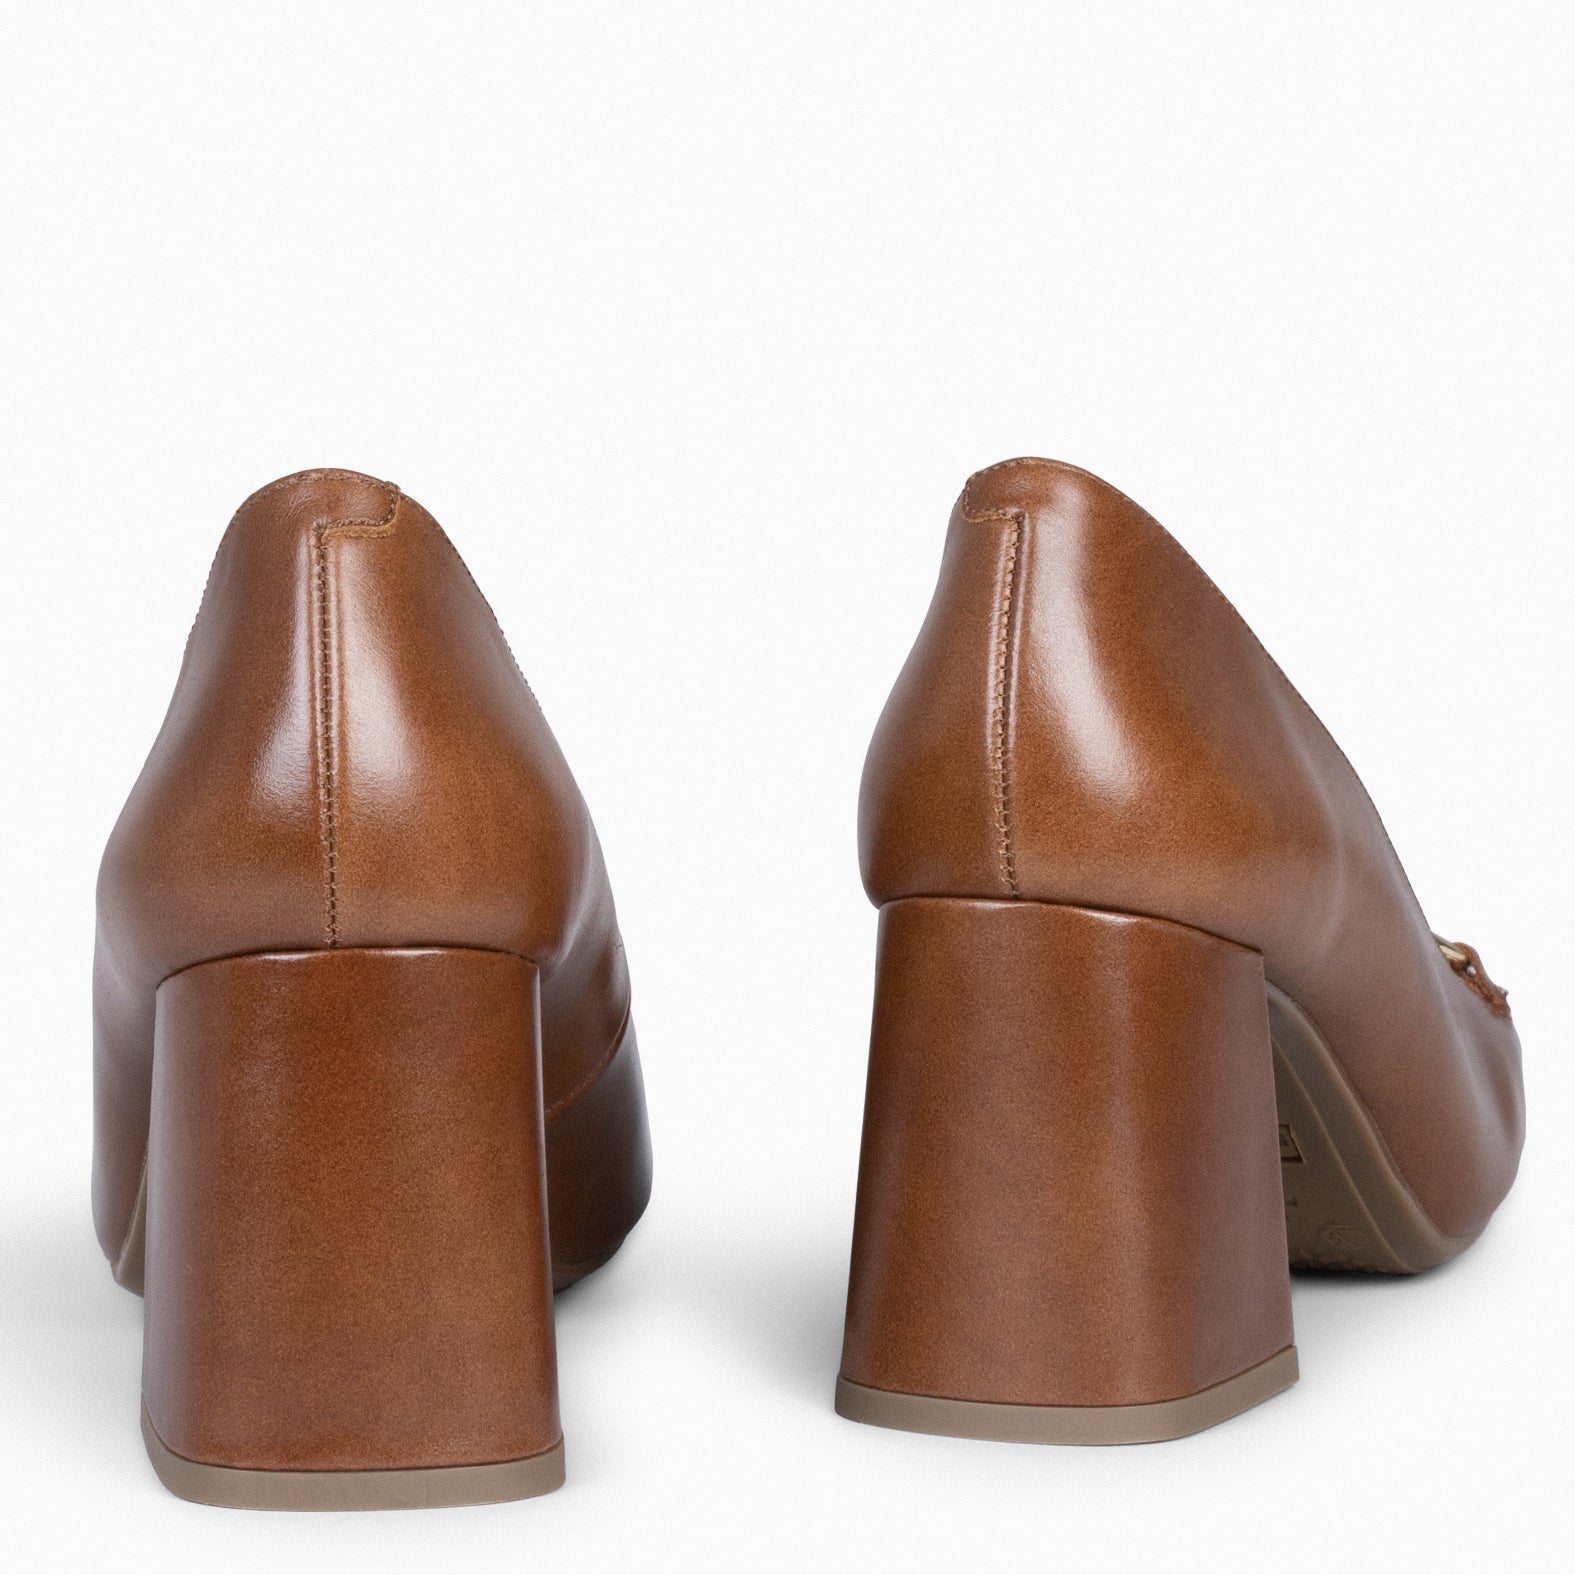 MÍA – Zapatos con tacón bloque CAMEL